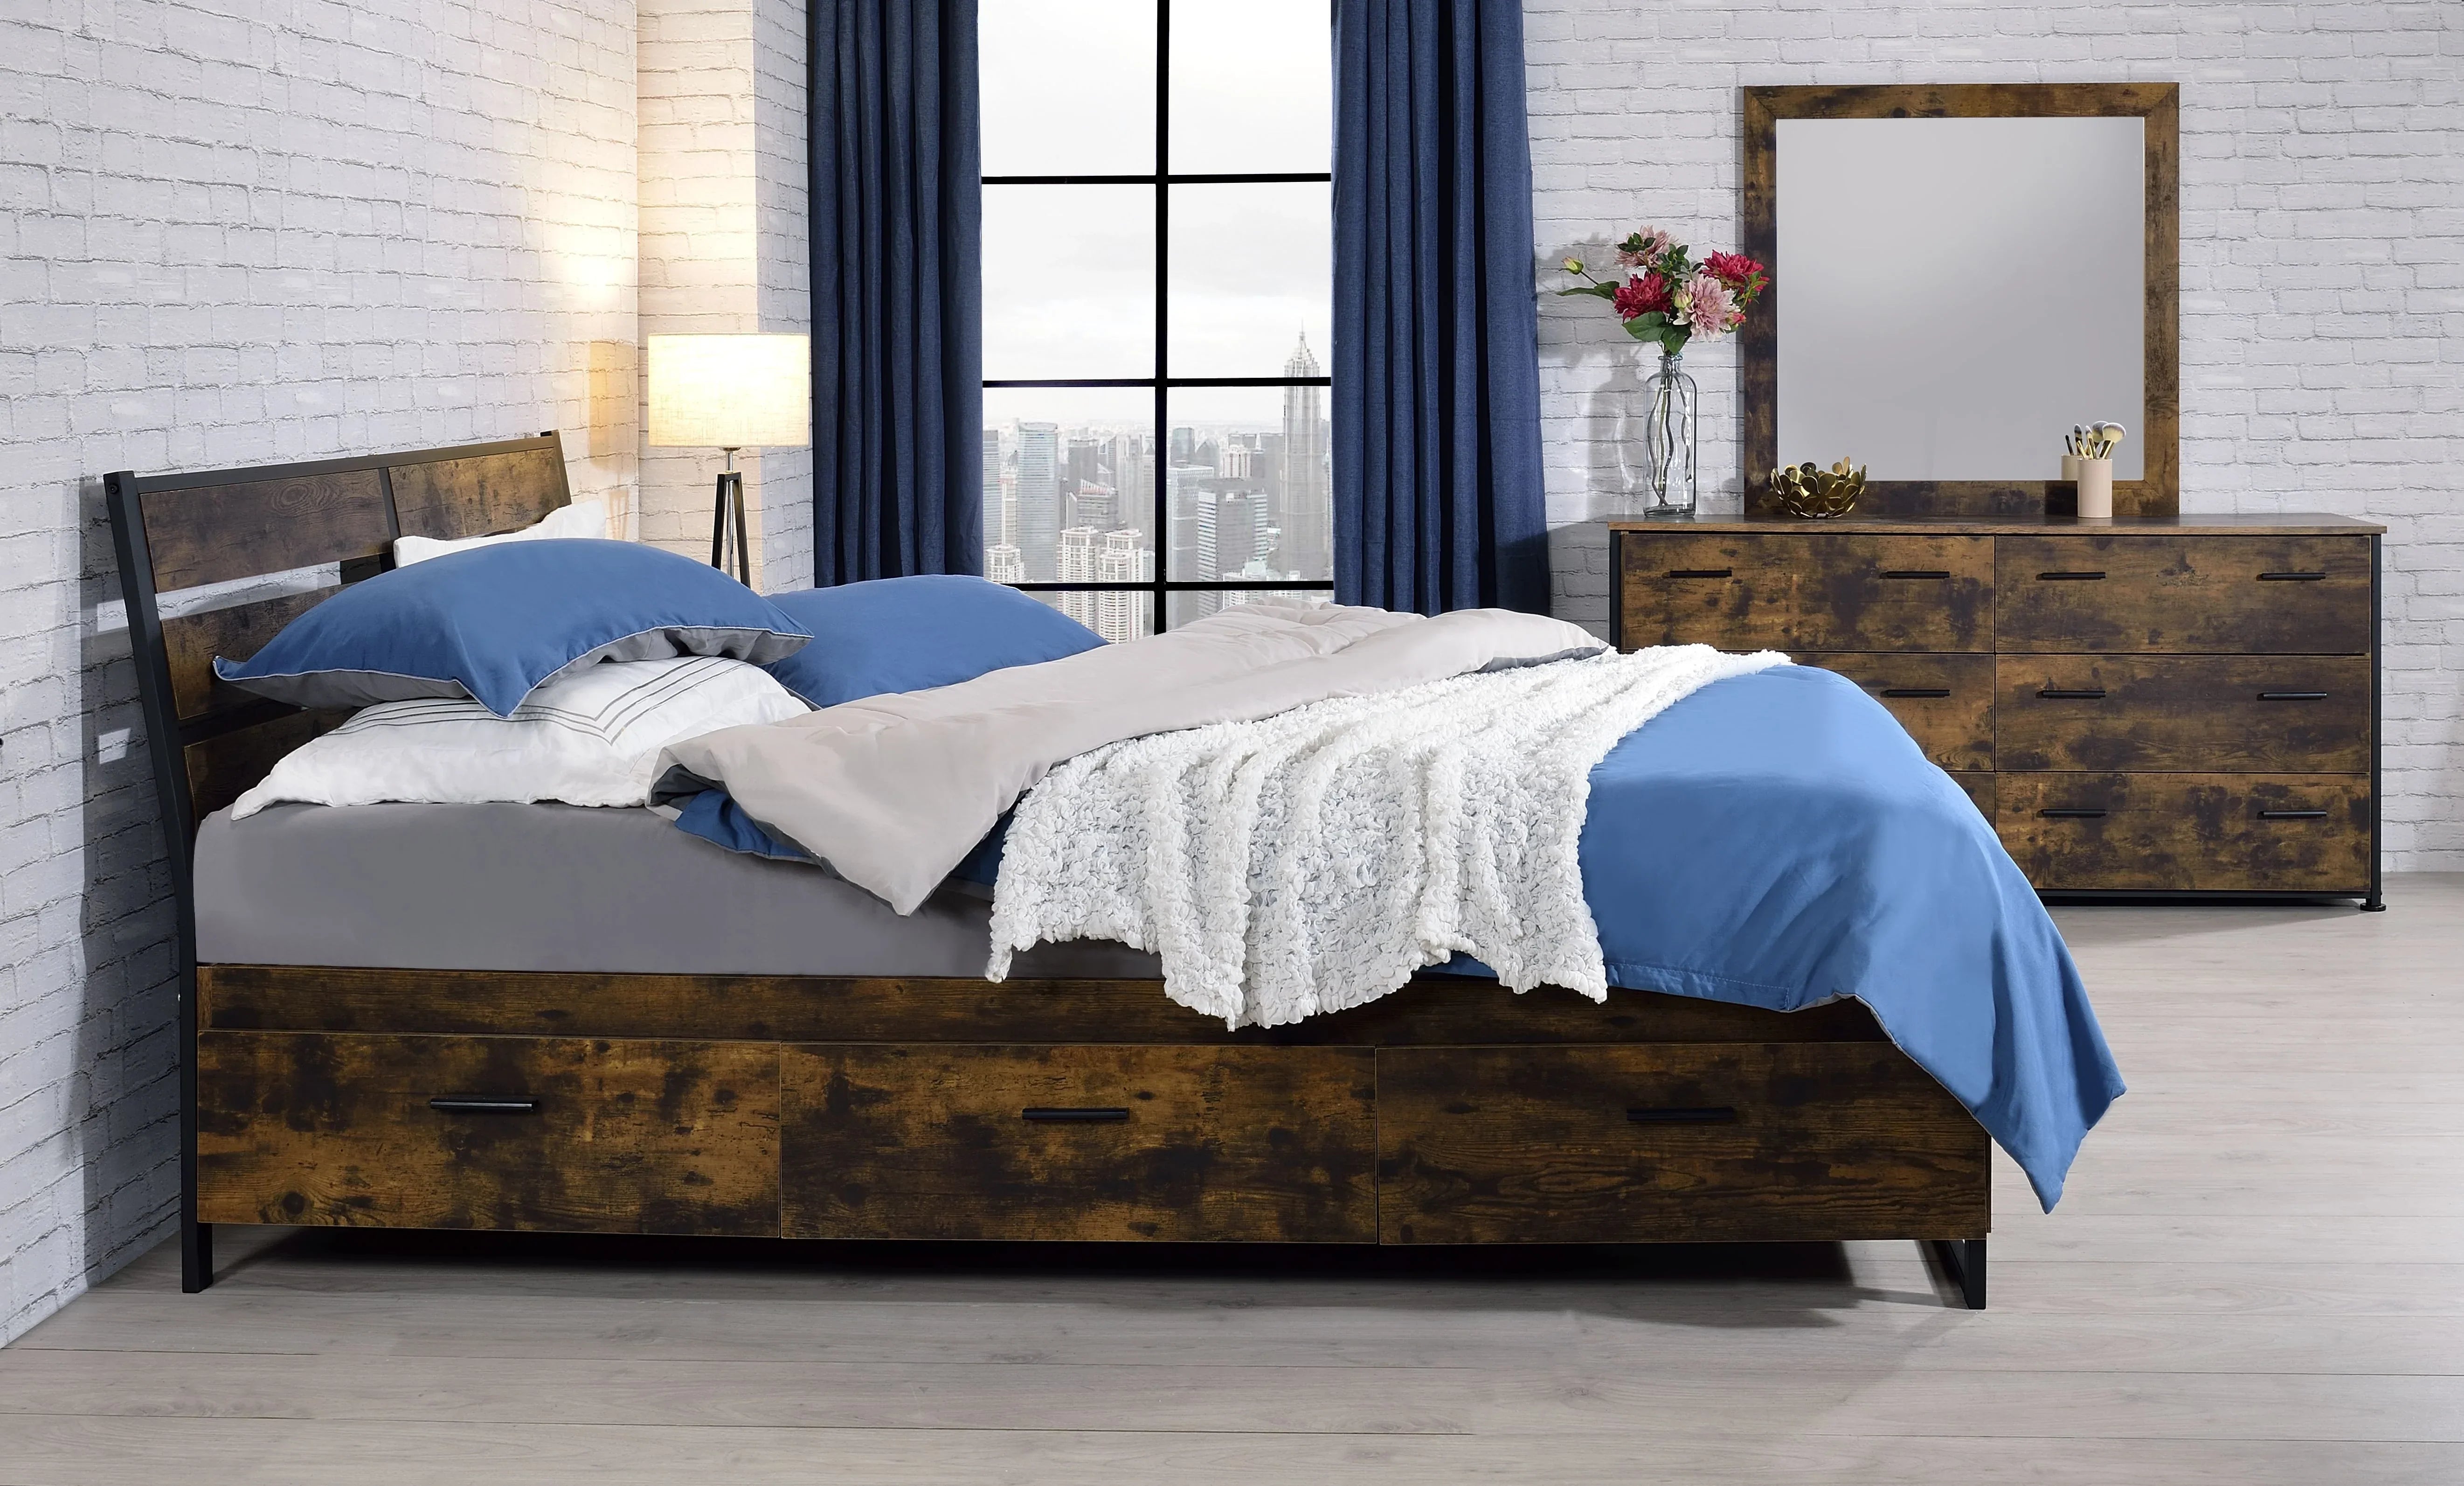 Juvanth Rustic Oak & Black Finish Eastern King Bed Model 24257EK By ACME Furniture